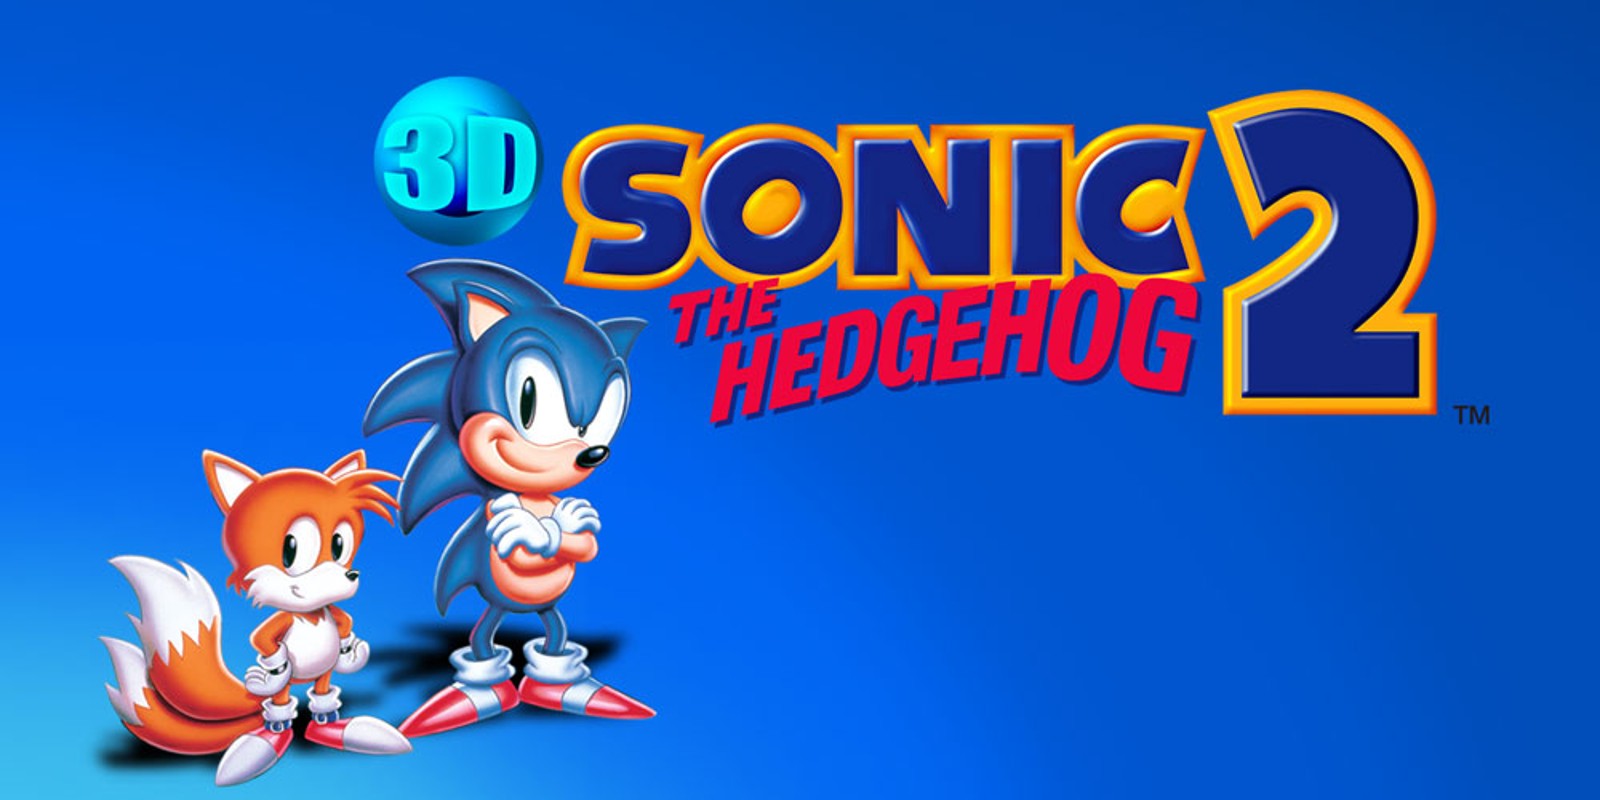 3D Sonic The Hedgehog 2 | Nintendo 3DS download software | Games | Nintendo